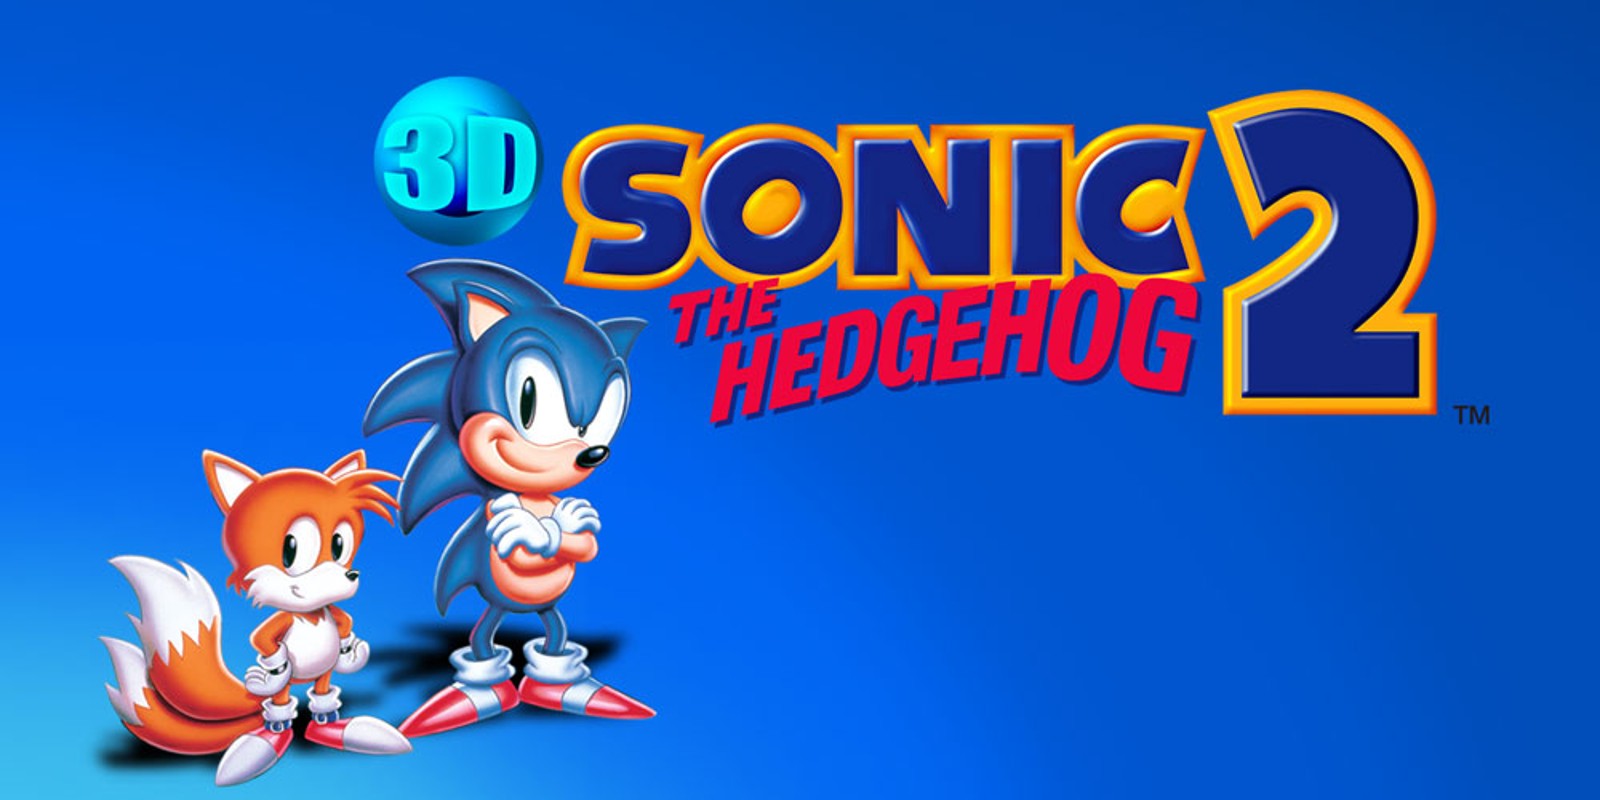 3D Sonic The Hedgehog 2 | Nintendo 3DS download software | Games | Nintendo